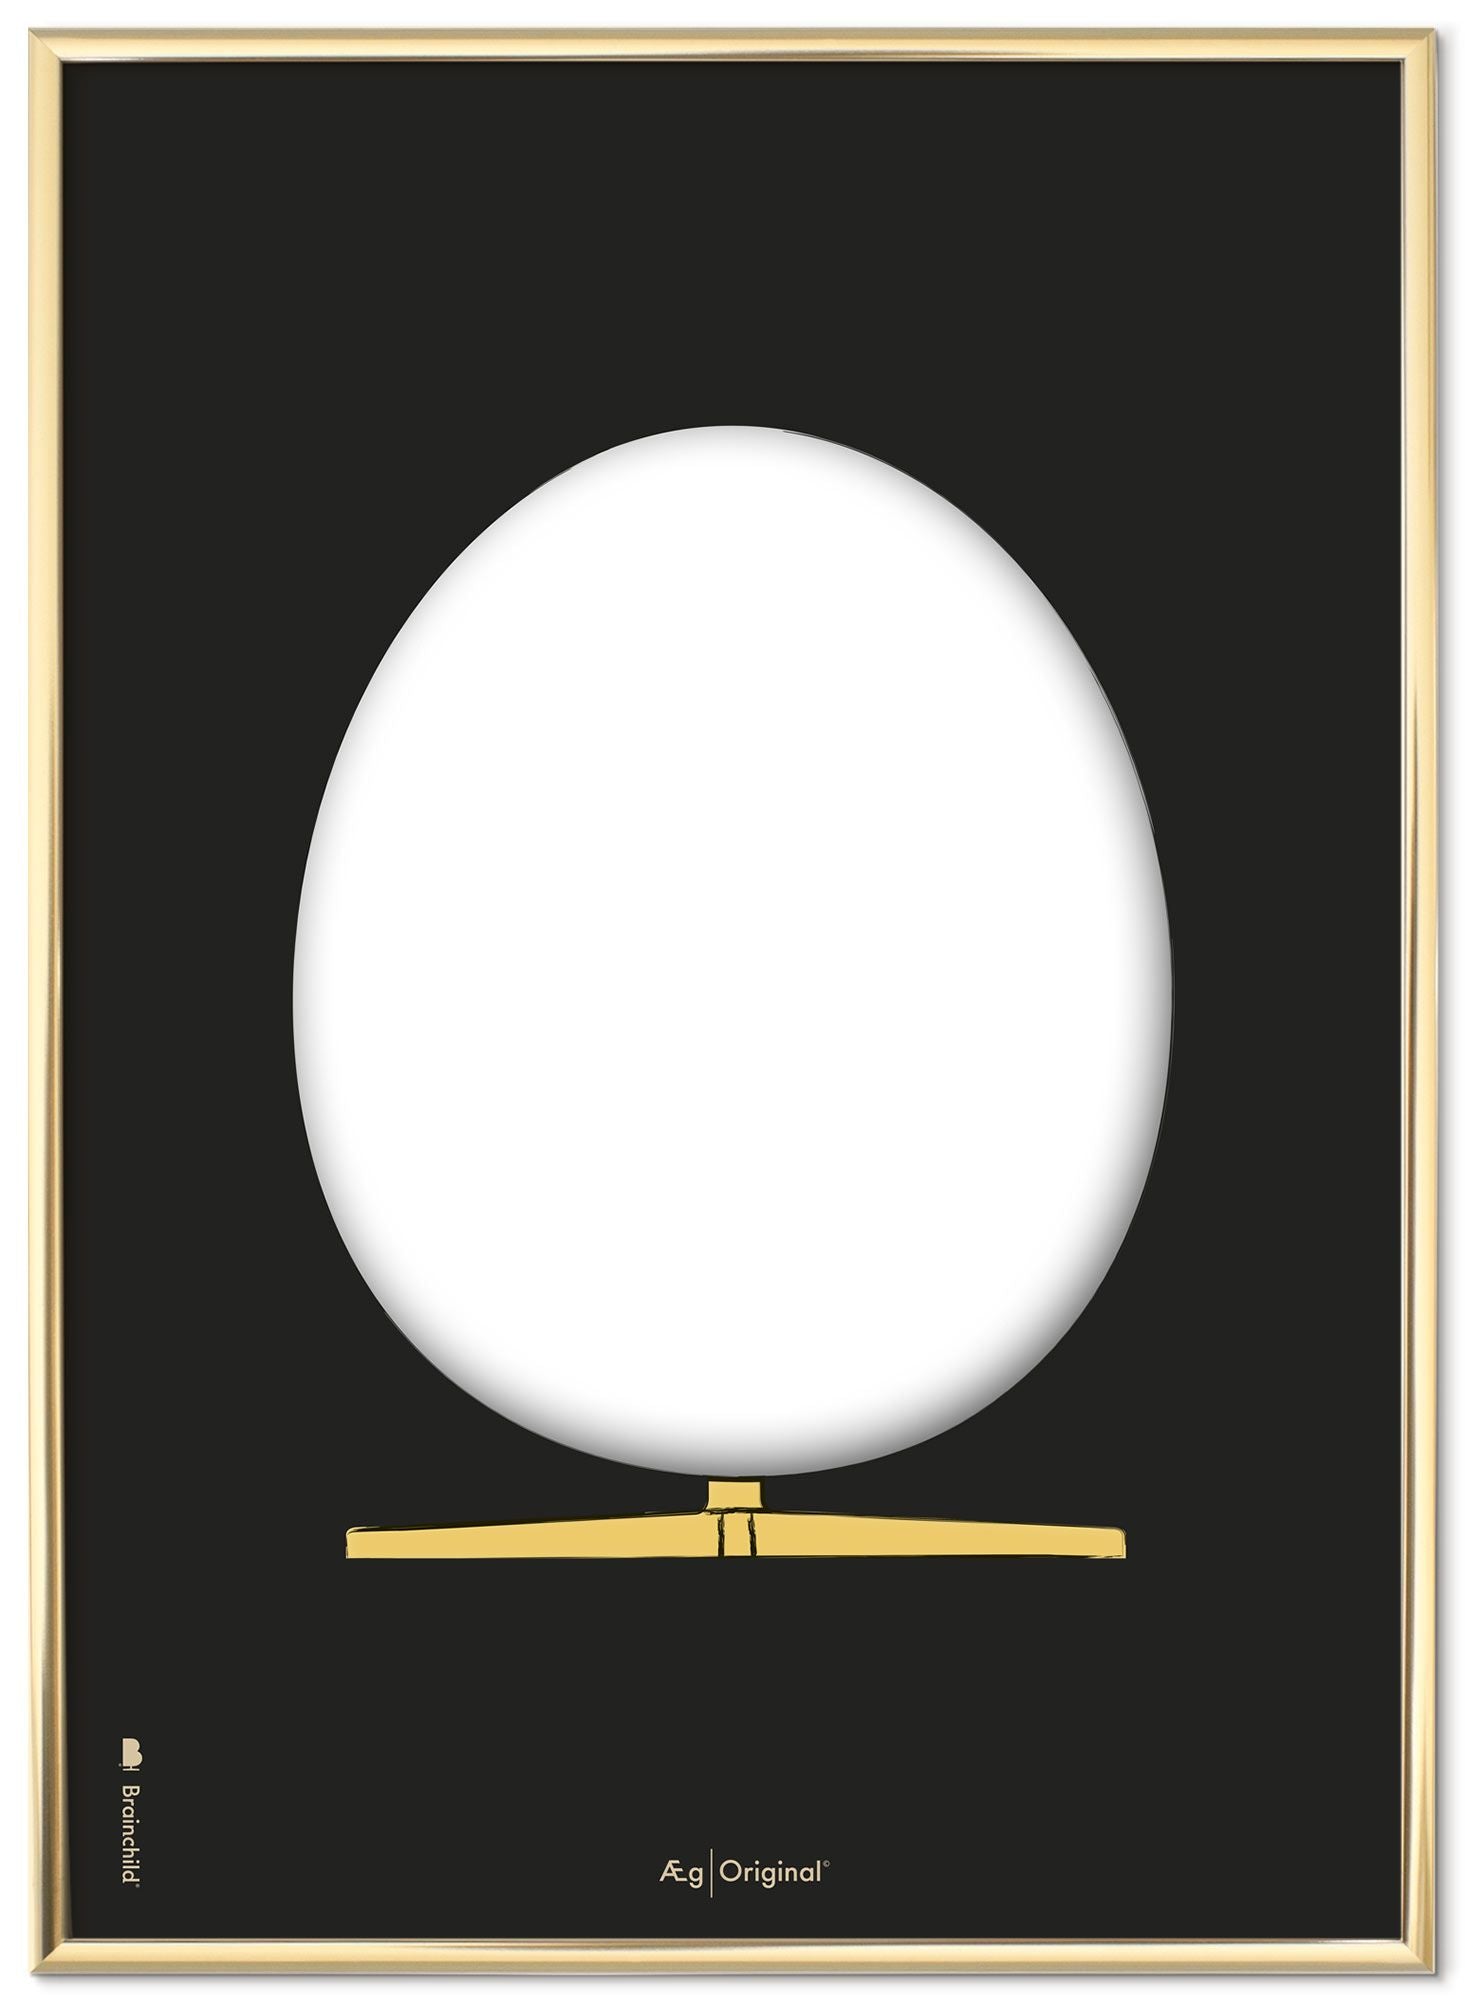 Brainchild The Egg Design Sketch Poster Frame Made Of Brass Colored Metal 30x40 Cm, Black Background